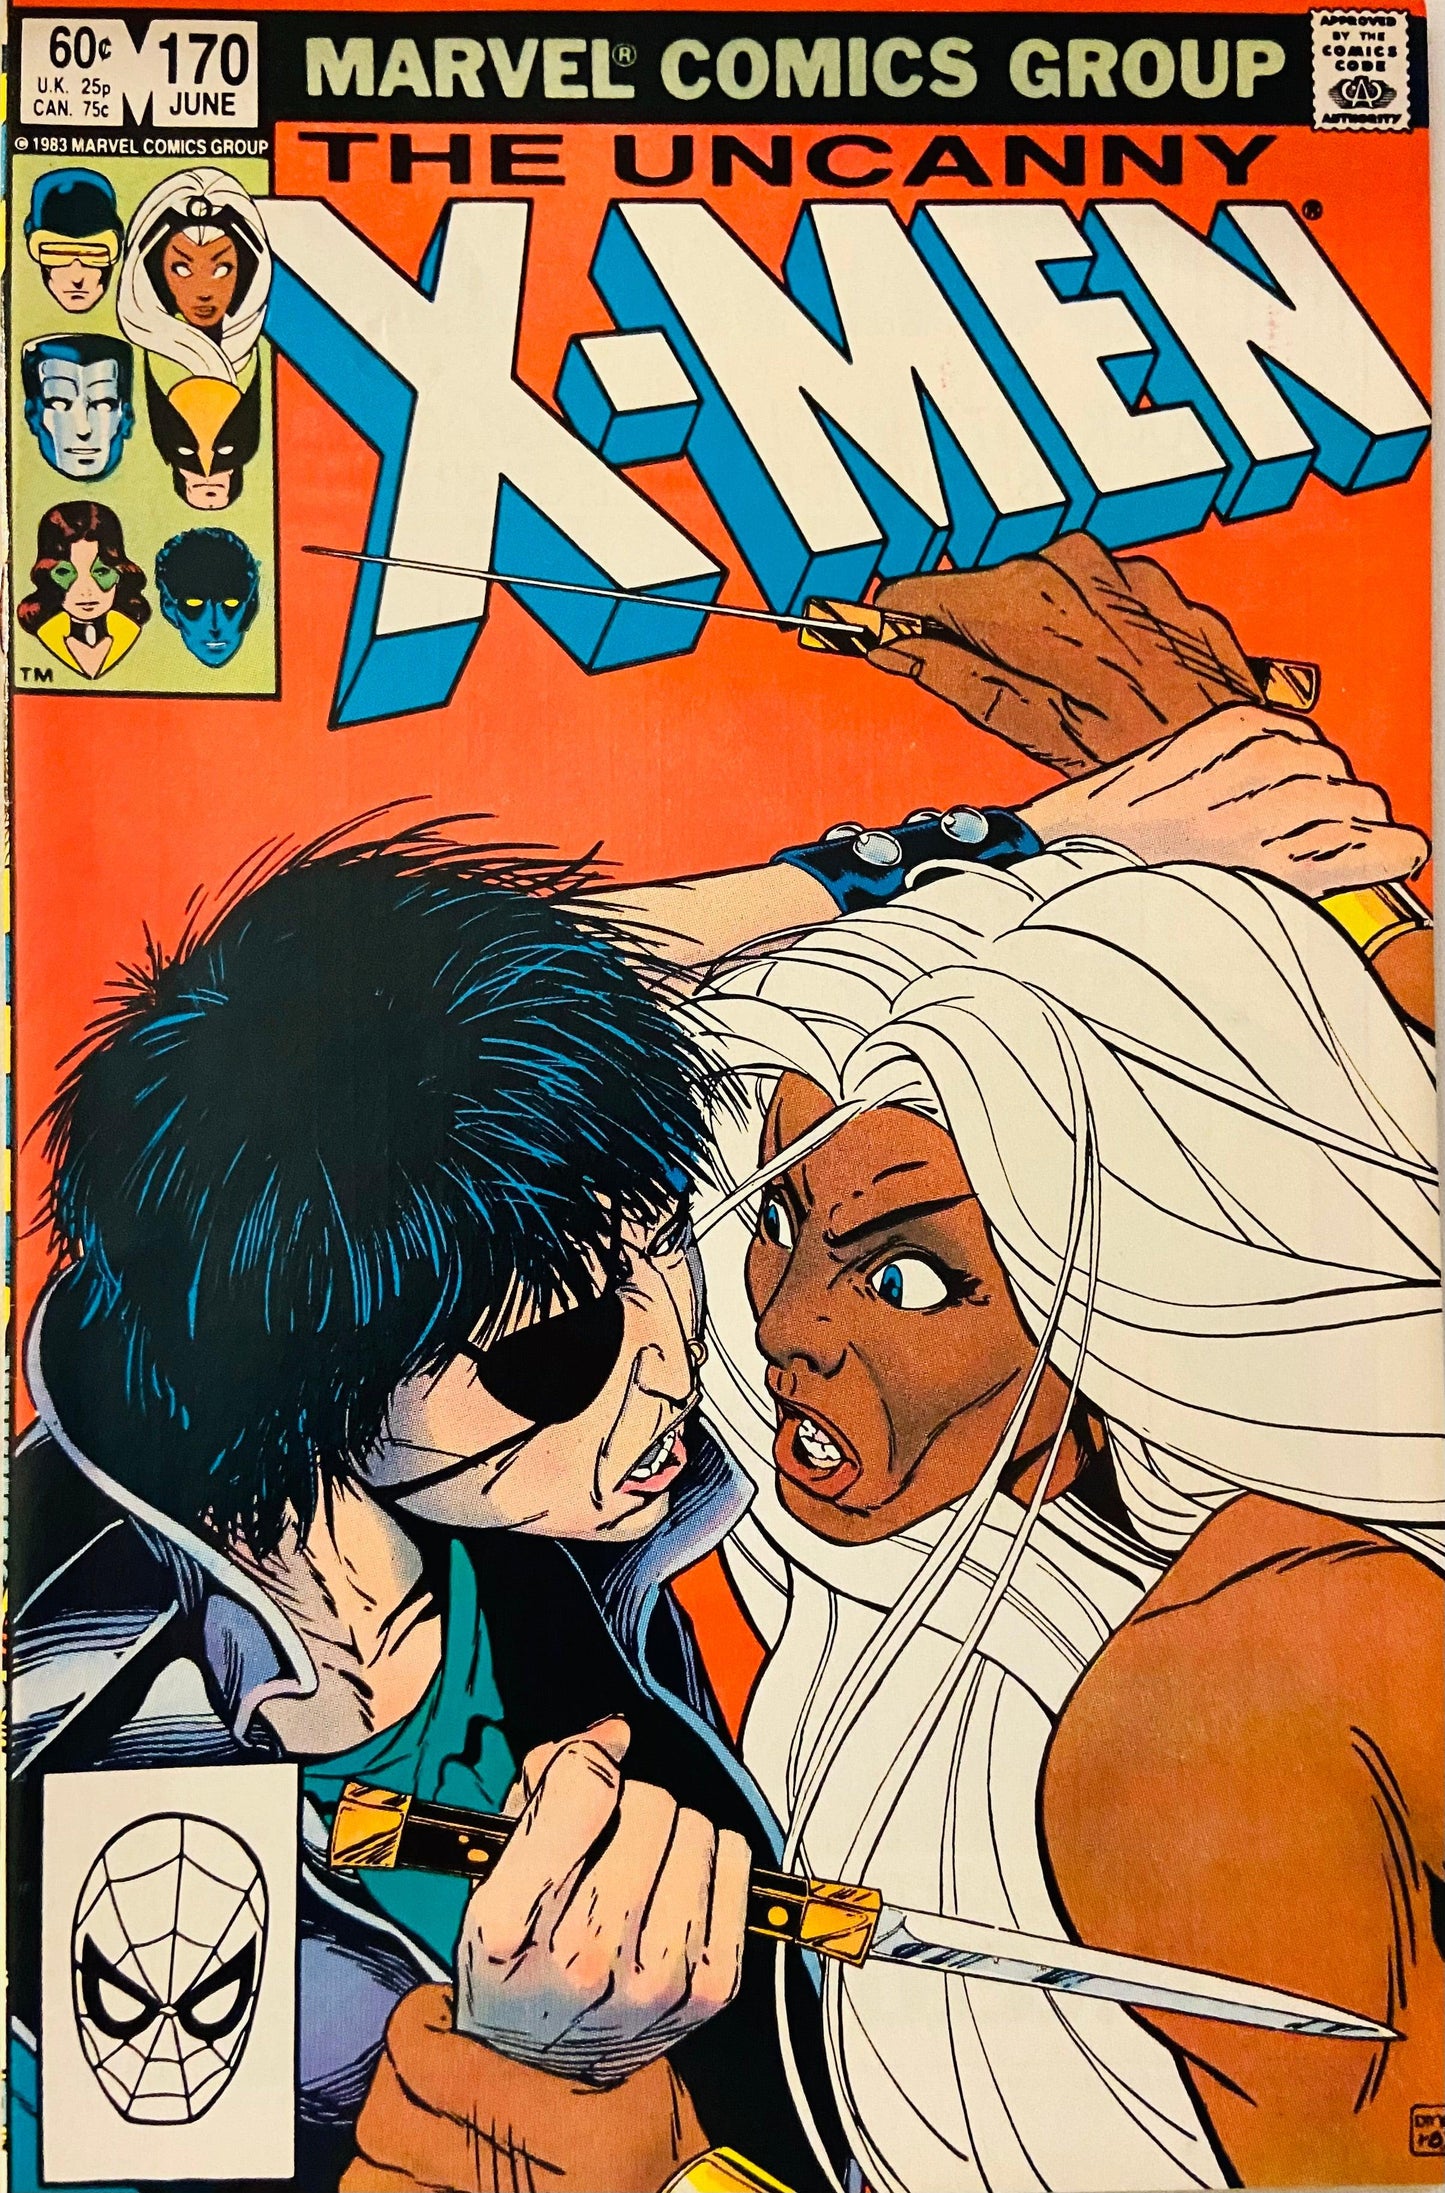 Uncanny X-Men #170 - HolyGrail Comix